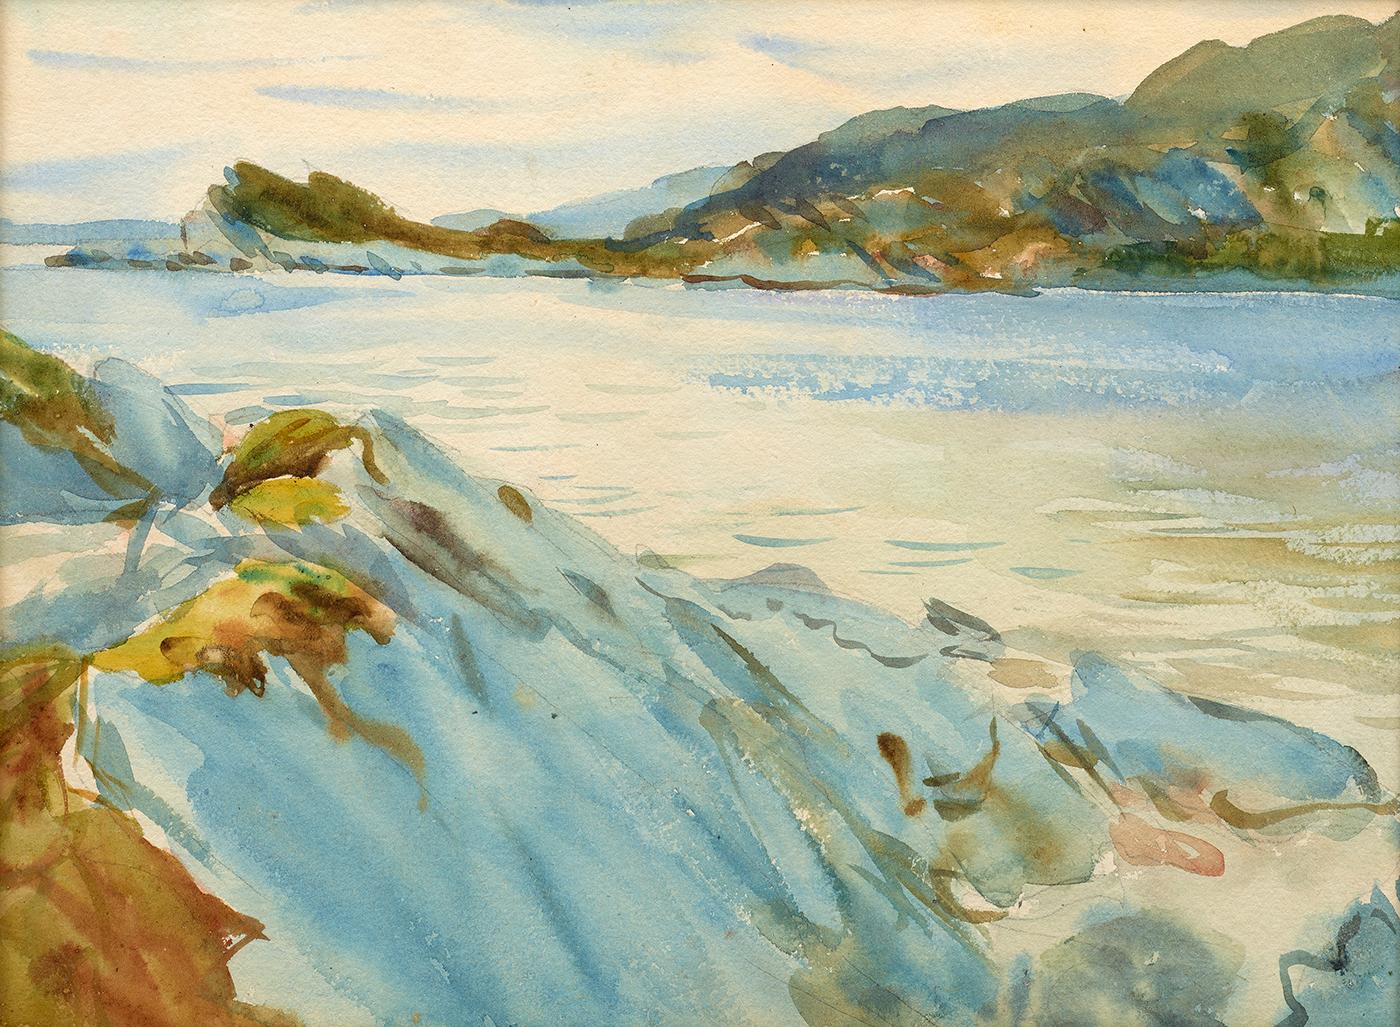 John Singer Sargent Landscape Painting - Loch Moidart, Inverness-shire (3), 1896